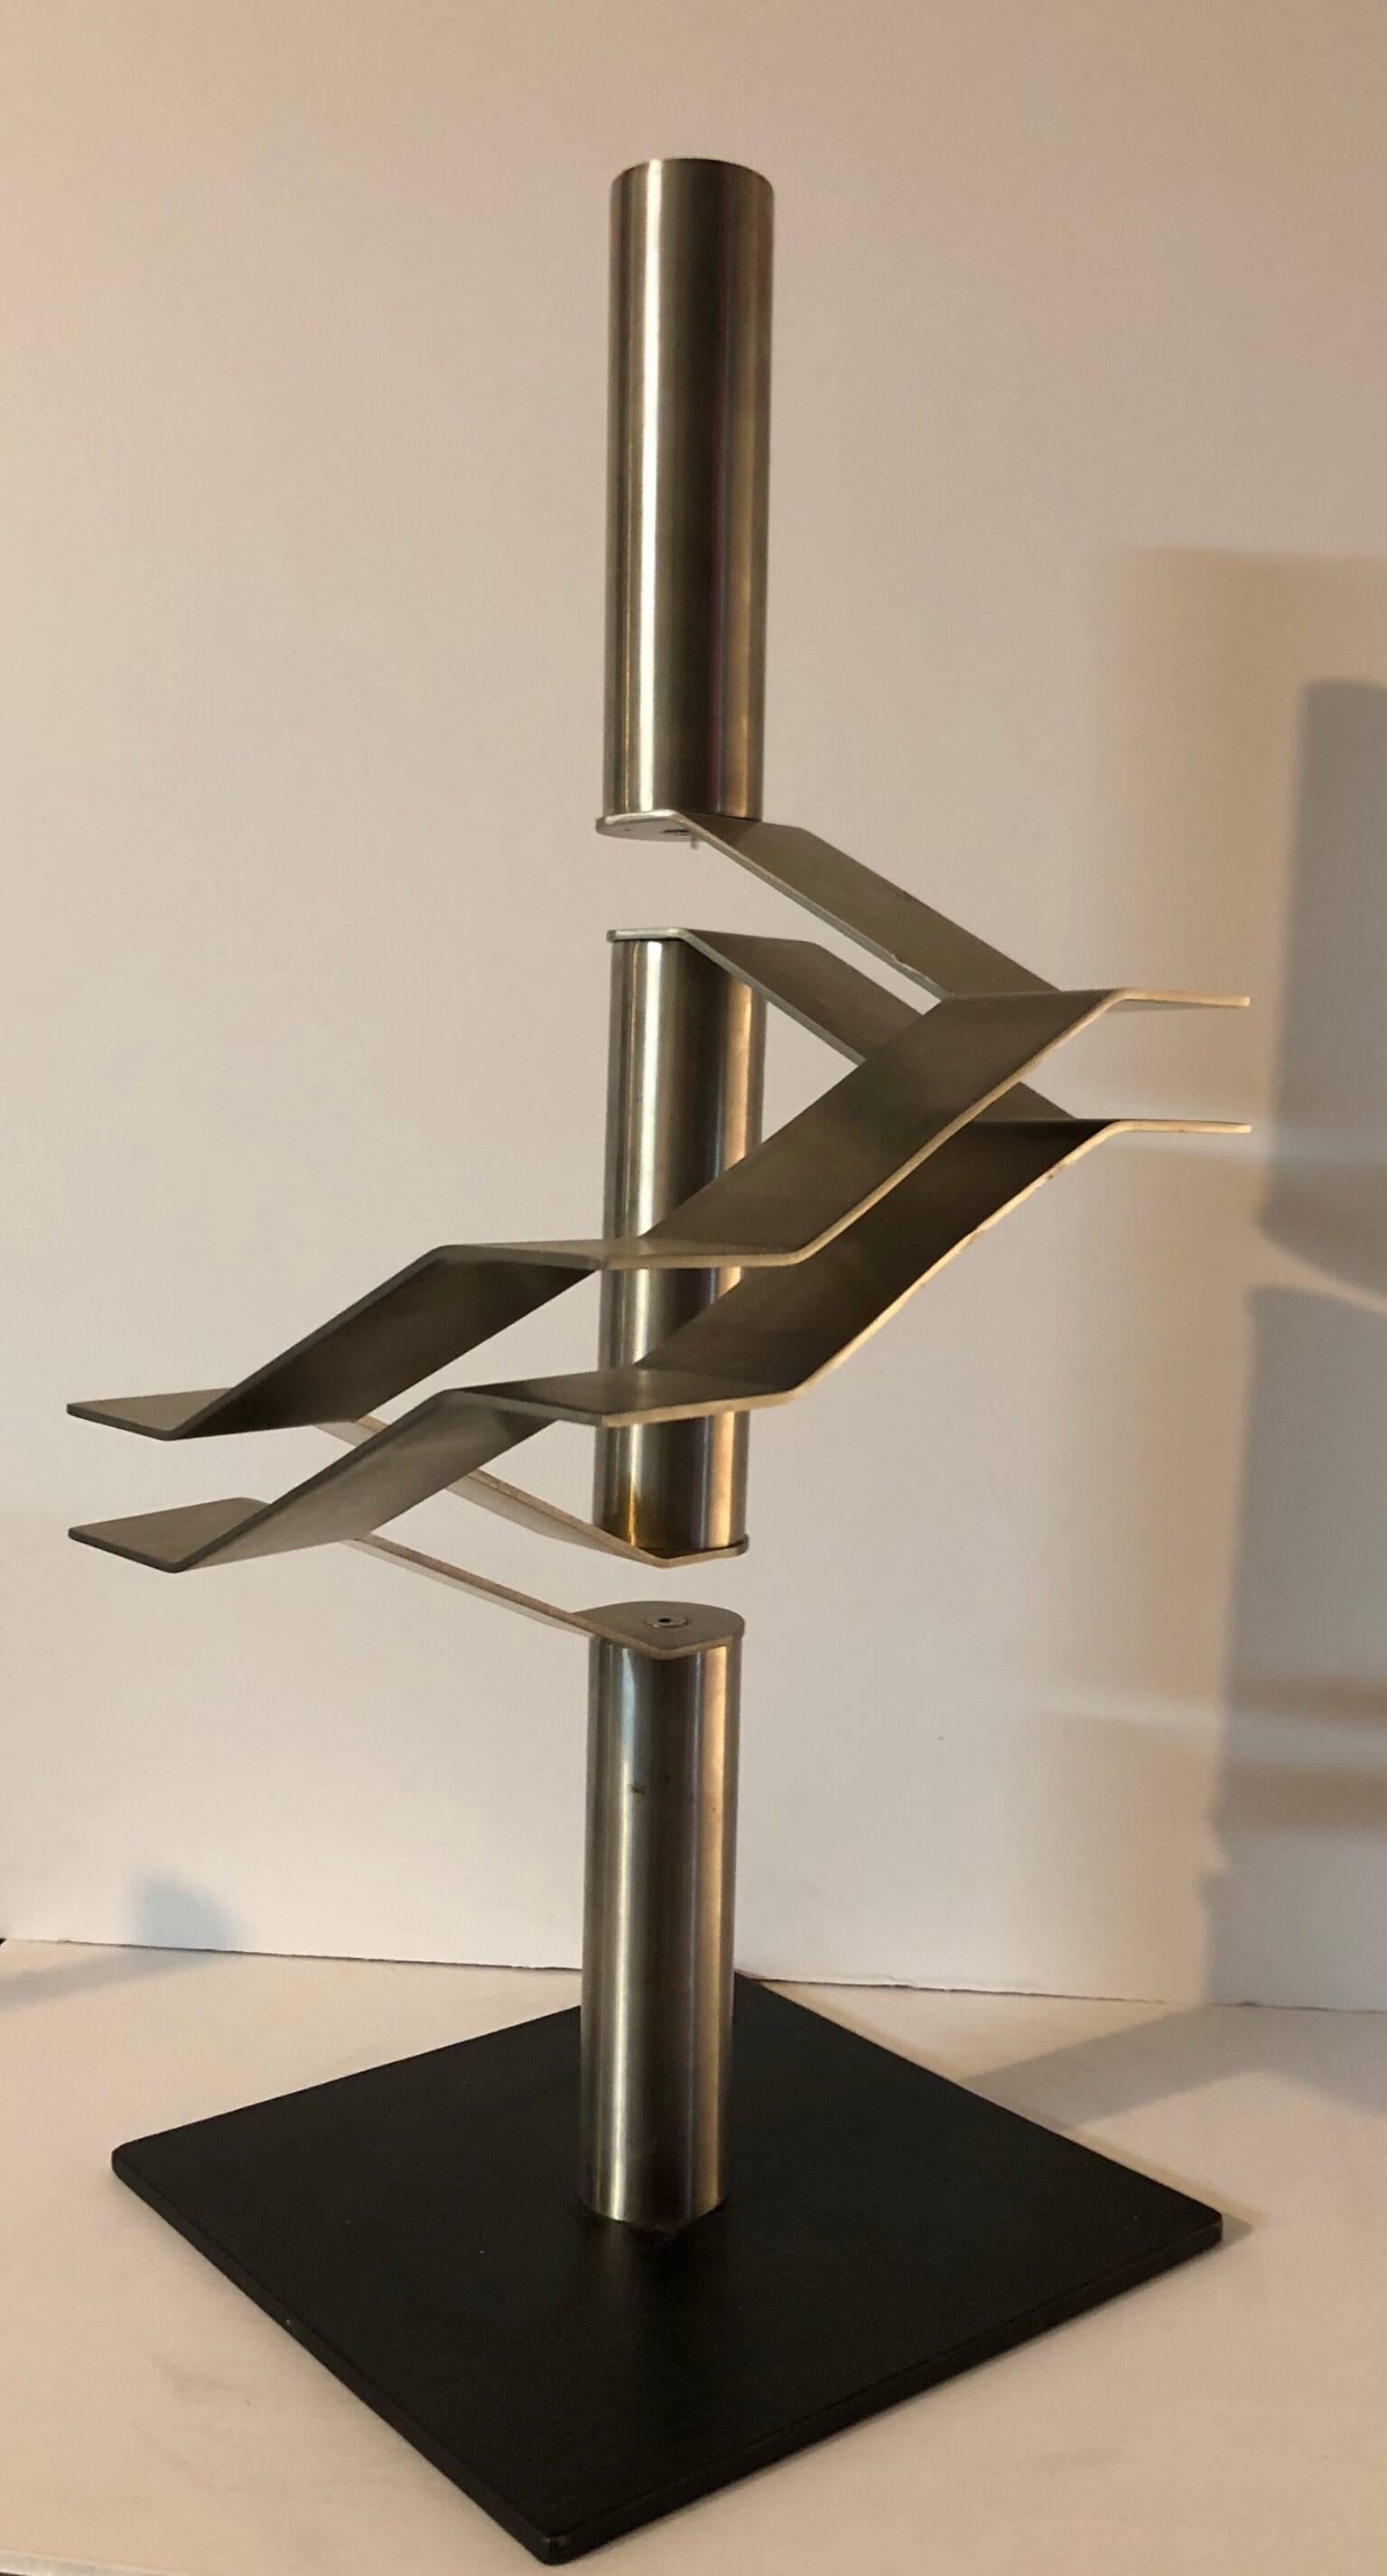 Abstract Sculpture Israel Hadany - Grande maquette de la sculpture israélienne abstraite « Trois tubes » en acier inoxydable